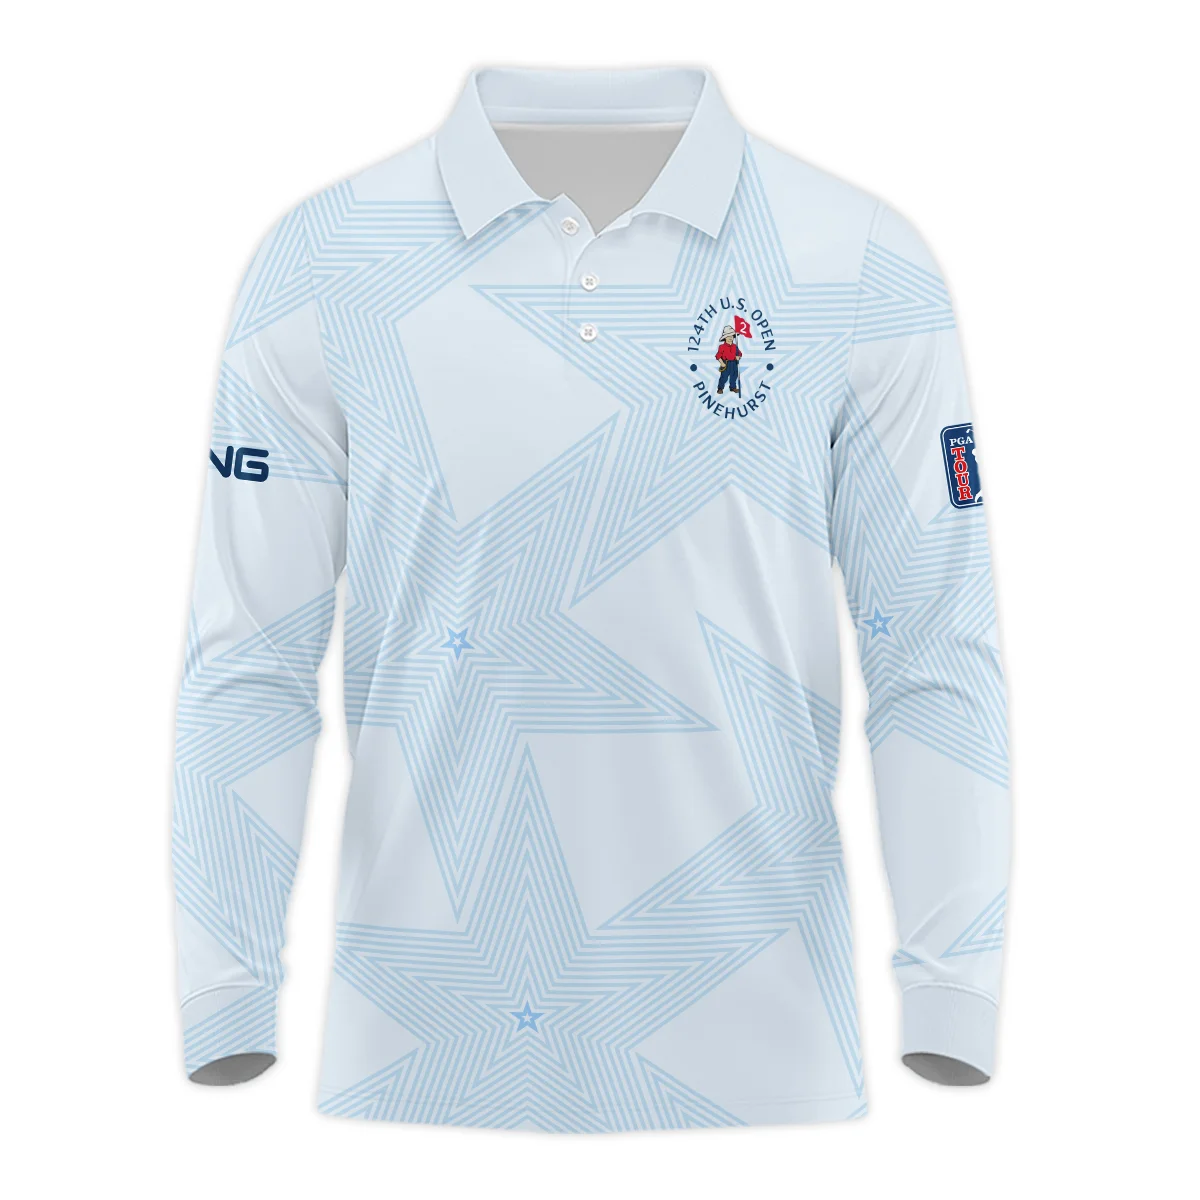 Golf 124th U.S. Open Pinehurst Ping Unisex T-Shirt Stars Light Blue Golf Sports All Over Print T-Shirt